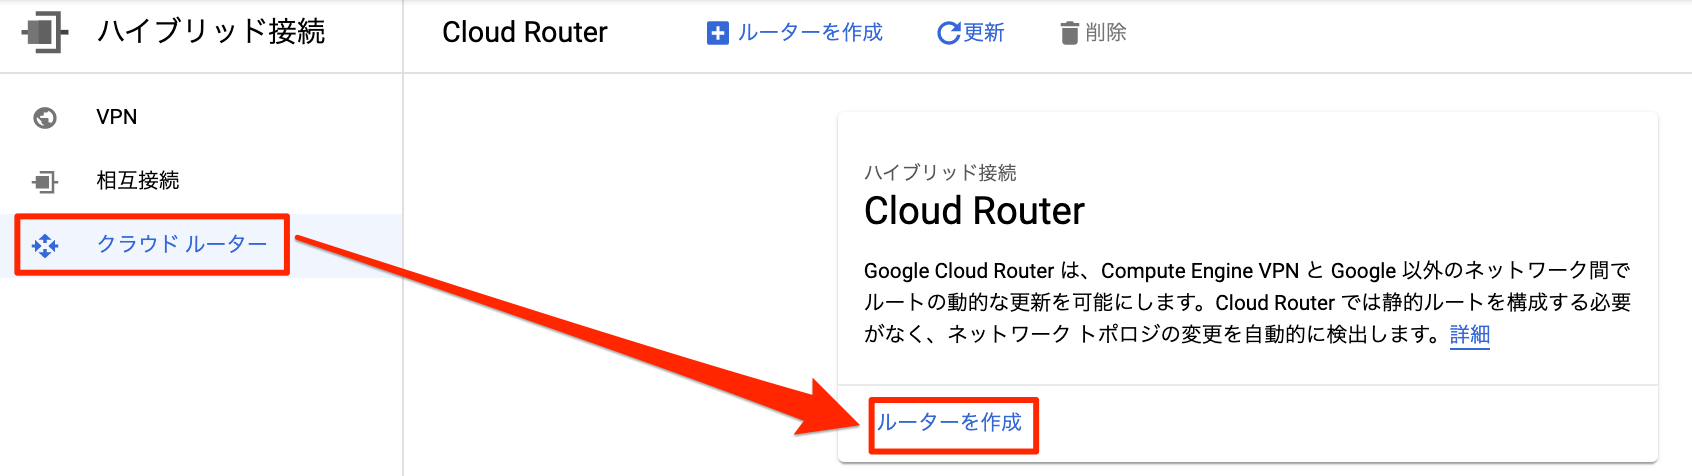 Cloud_Router_–_ハイブリッド接続_–_qwiklabs-gcp-01-bc4…_–_Google_Cloud_Platform.png